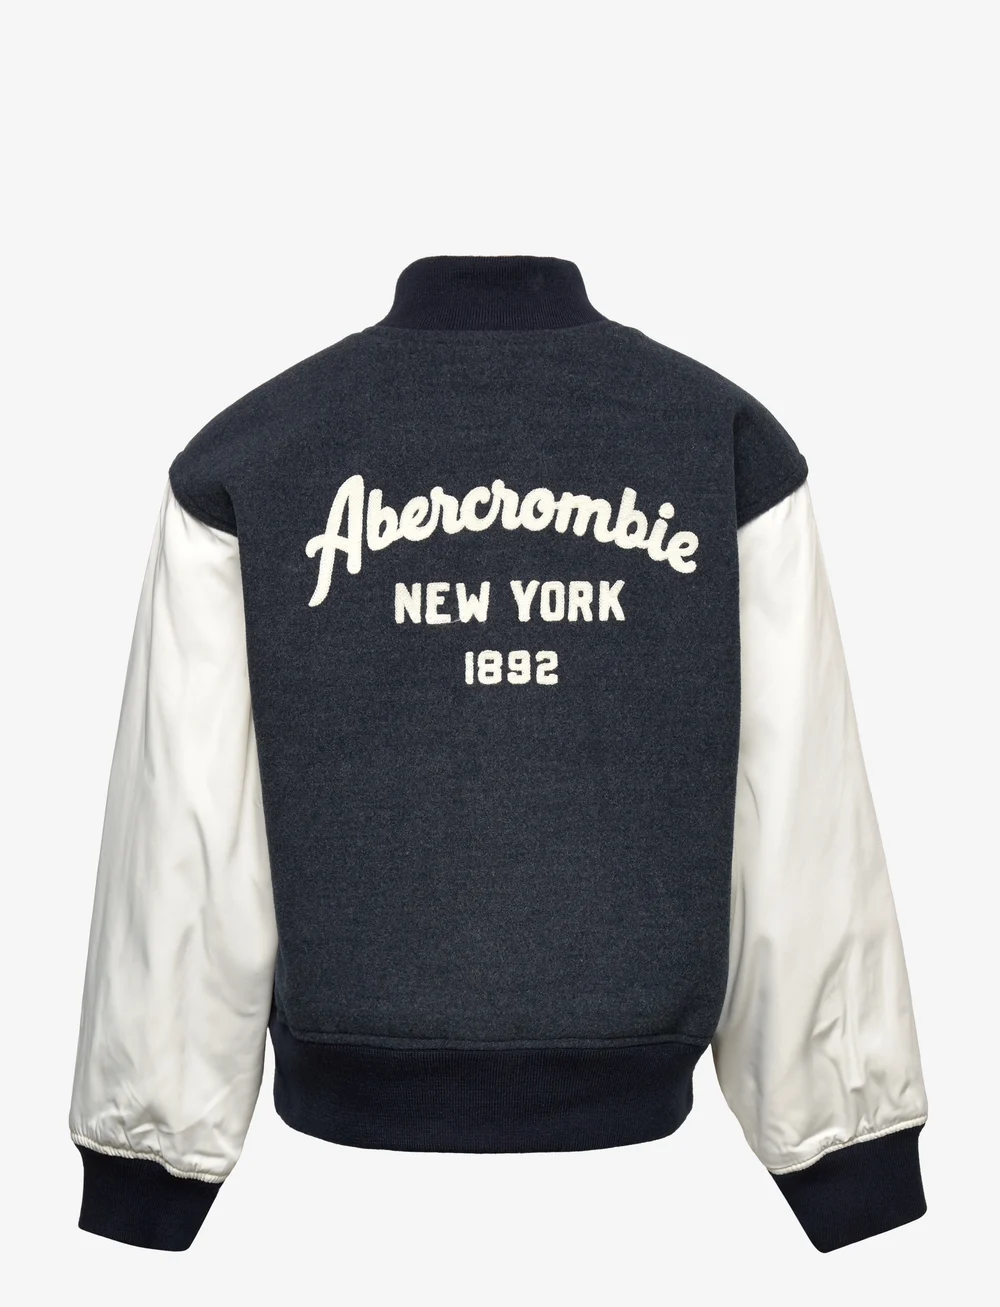 Abercrombie & Fitch Kids Boys Outerwear - 839 kr. Køb Bomberjakker fra & Fitch online på Boozt.com. Hurtig levering & nem